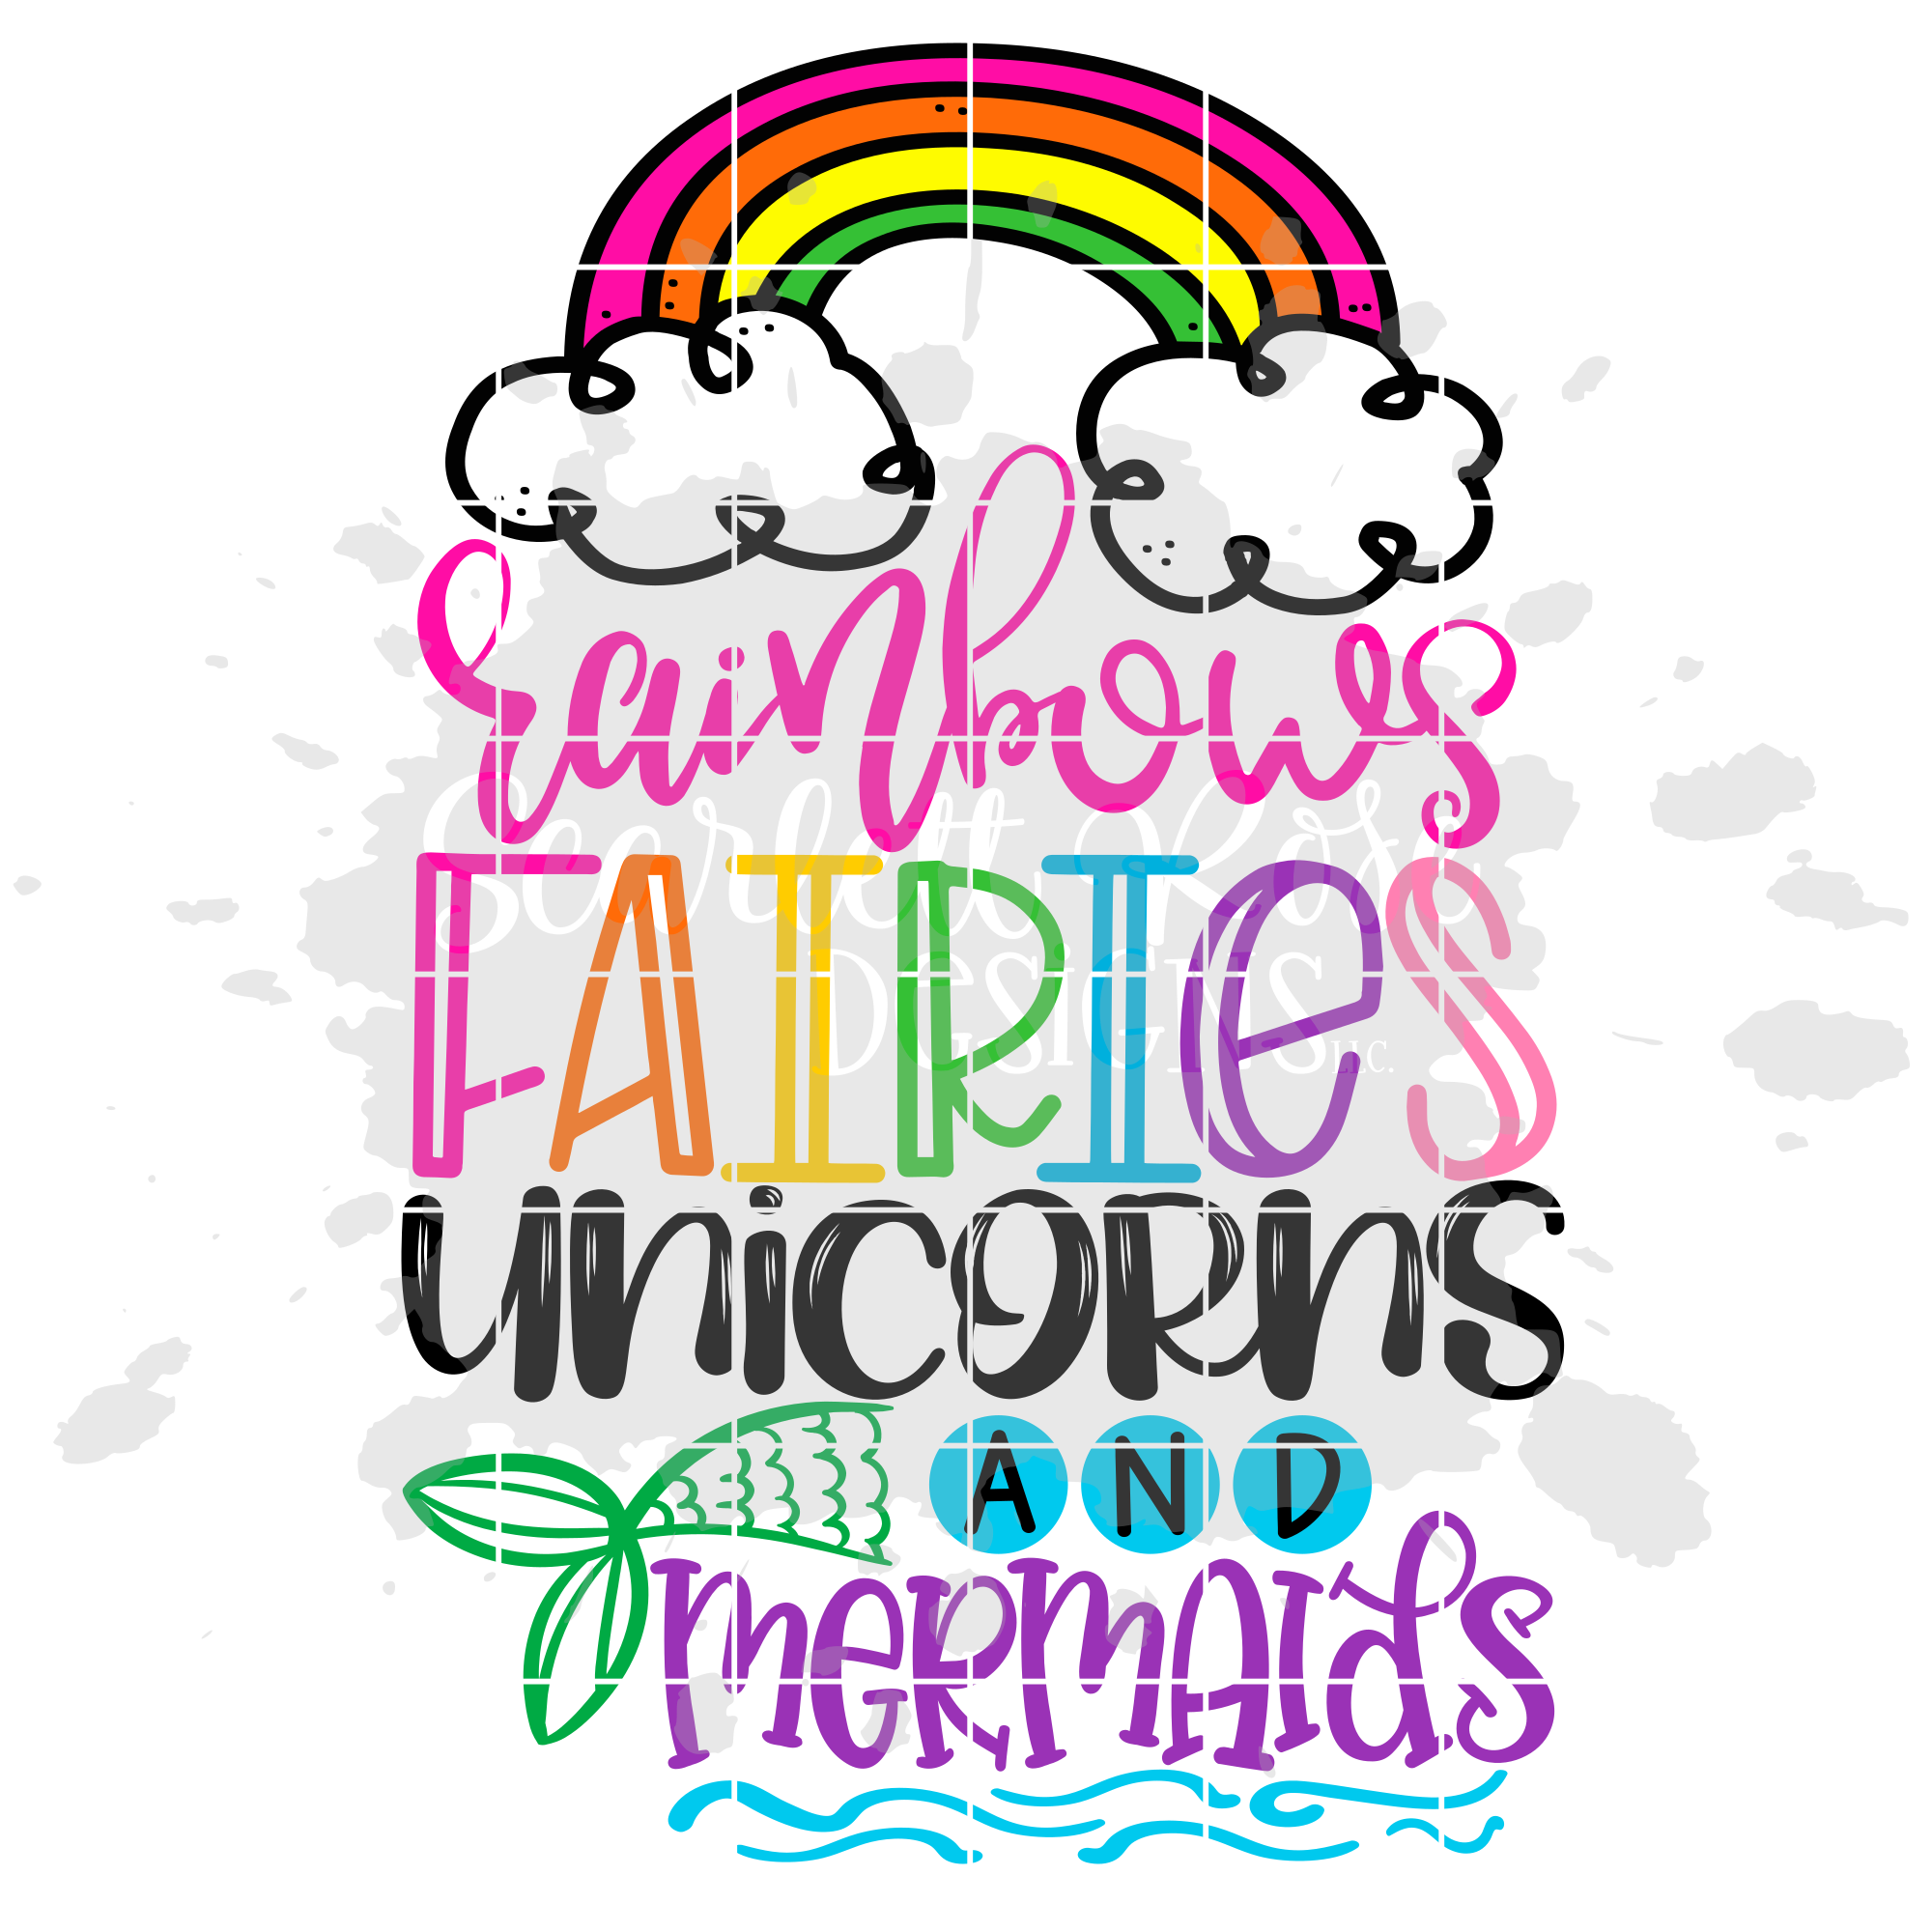 Download Rainbows Fairies Unicorns And Mermaids Svg Cut File Scarlett Rose Designs PSD Mockup Templates